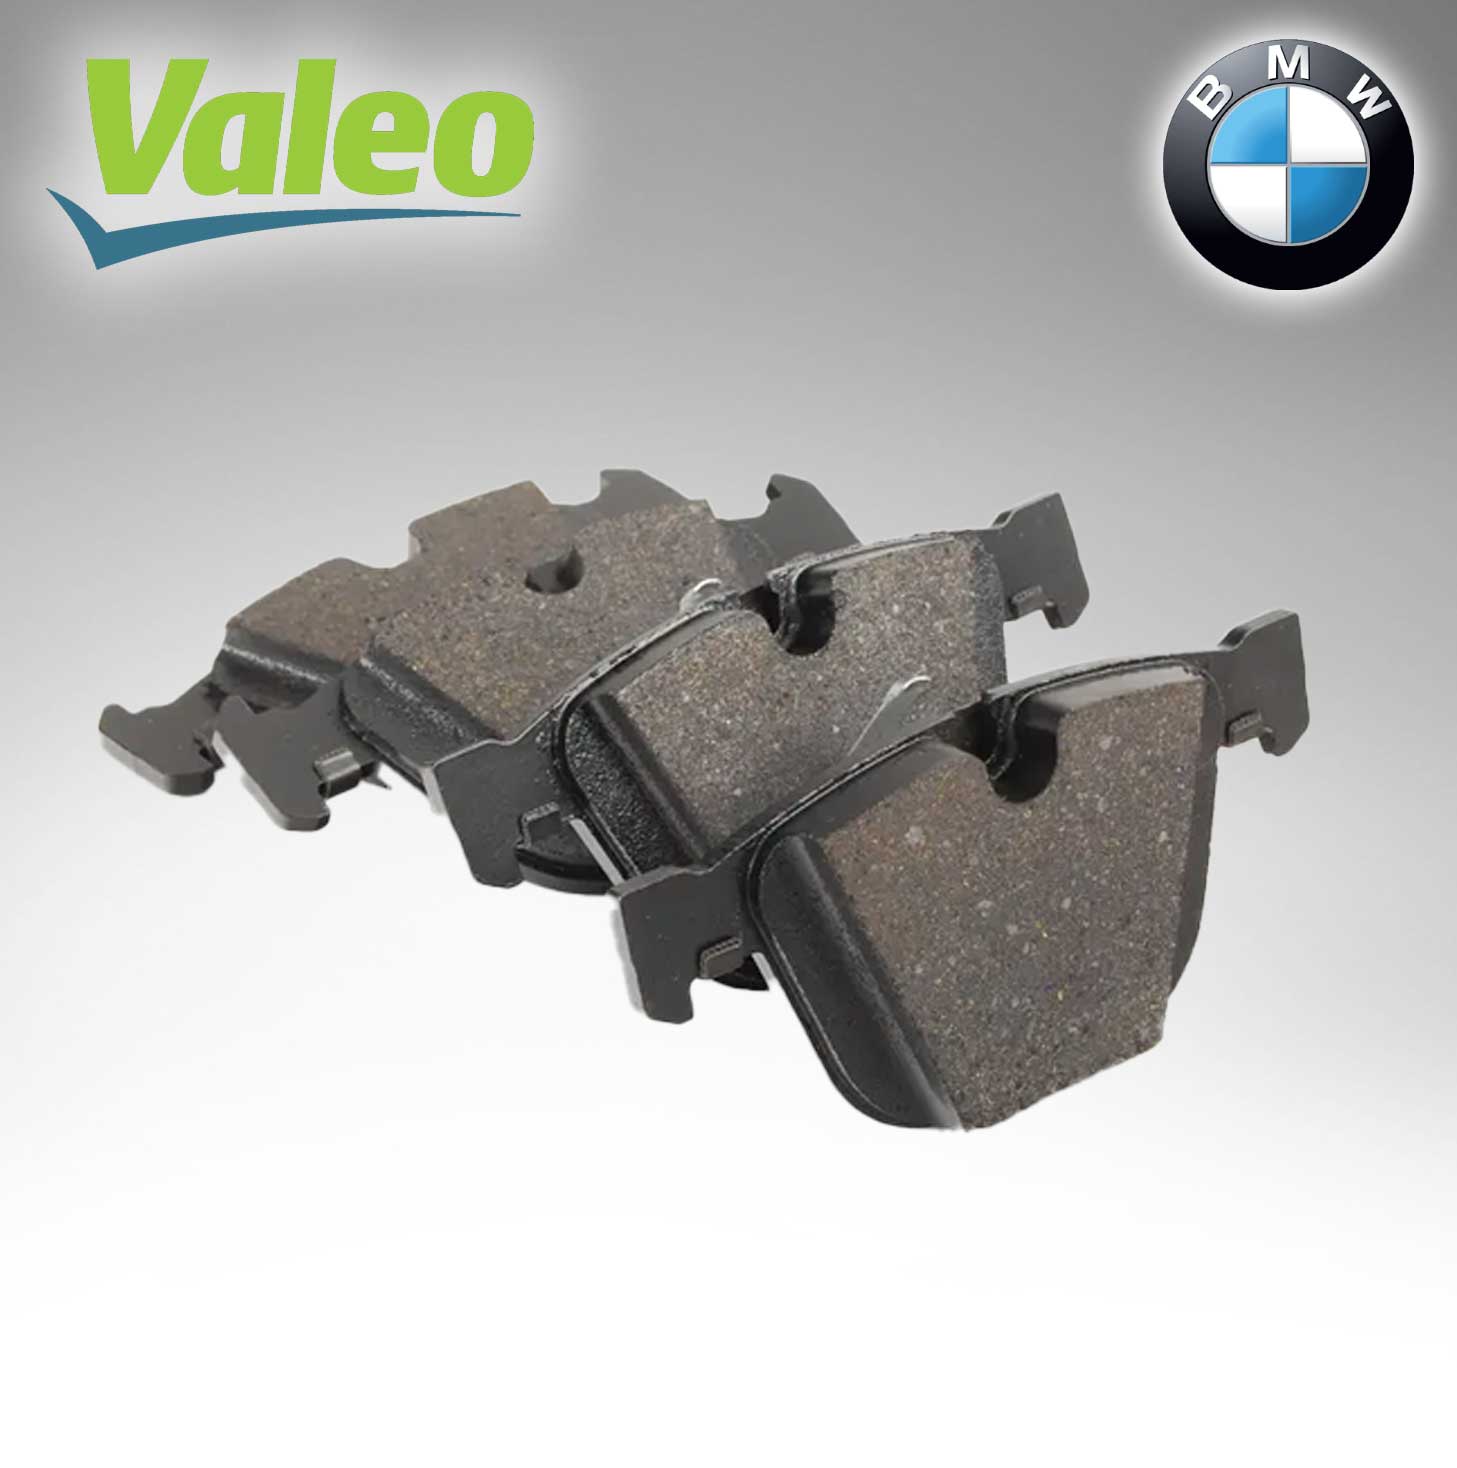 Valeo BRAKE PADS BMW 7 SERIES F01 (Val#671127) 34216790966